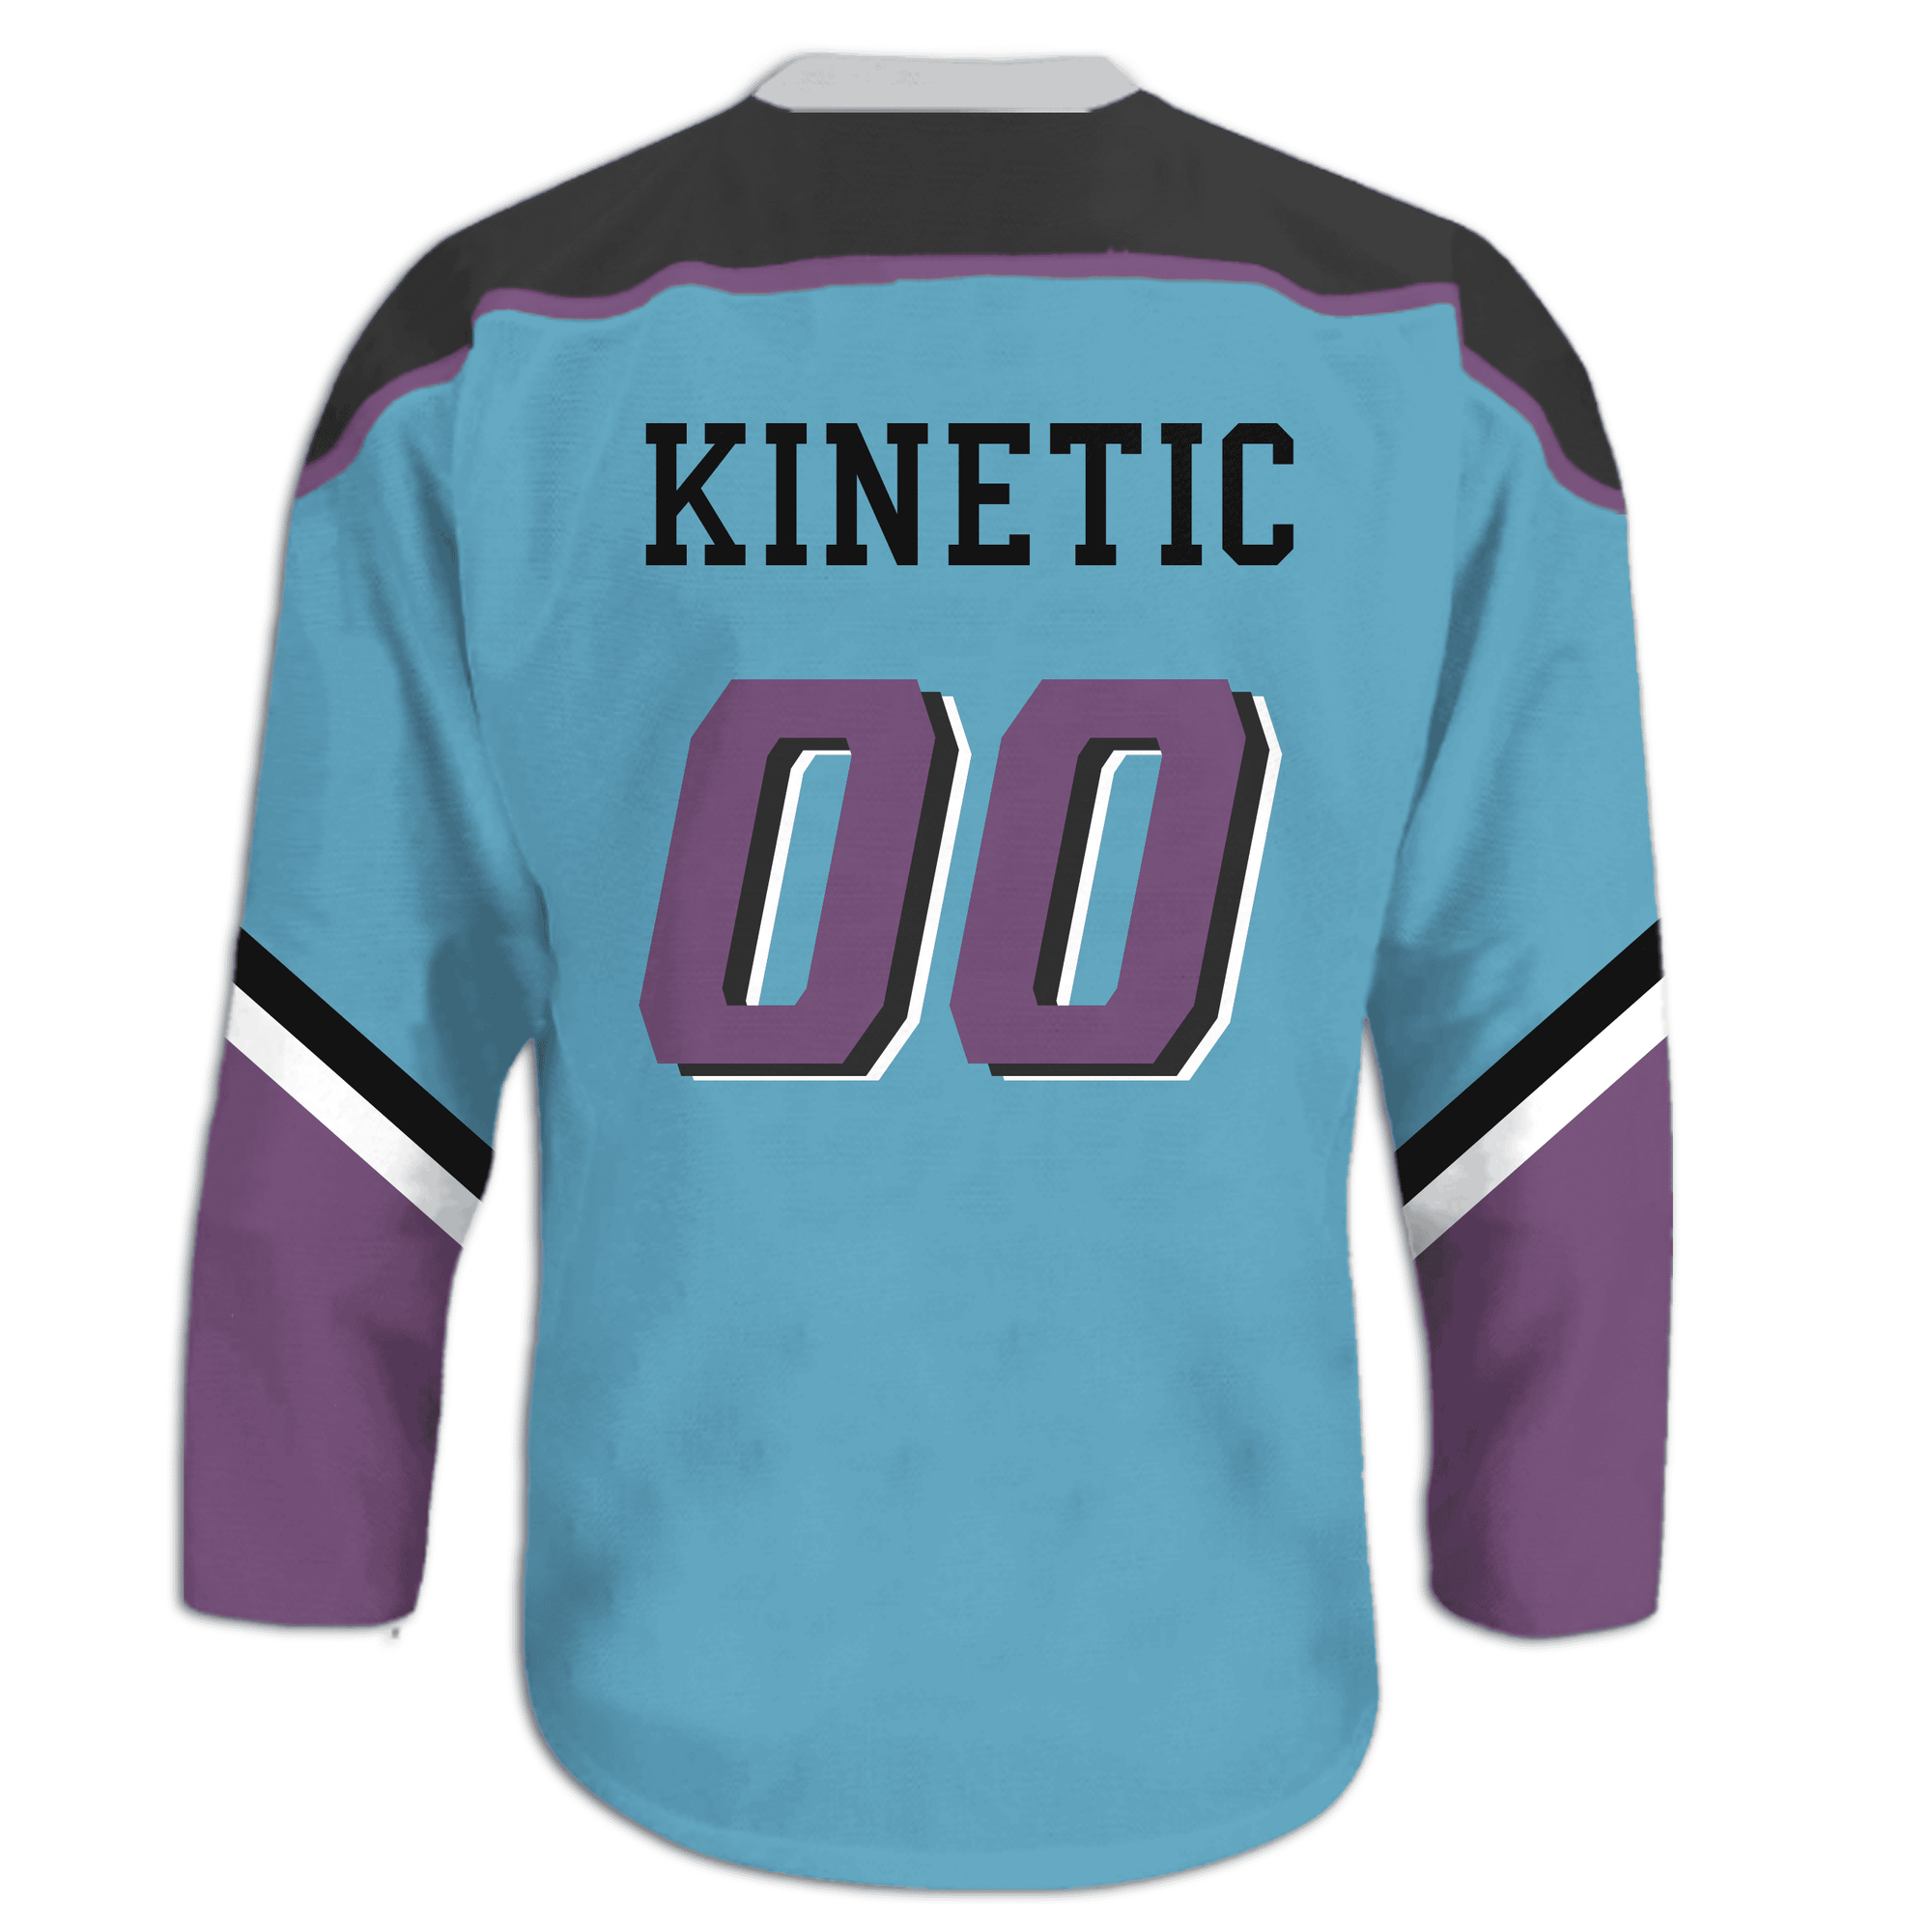 Theta Xi - Kratos Hockey Jersey